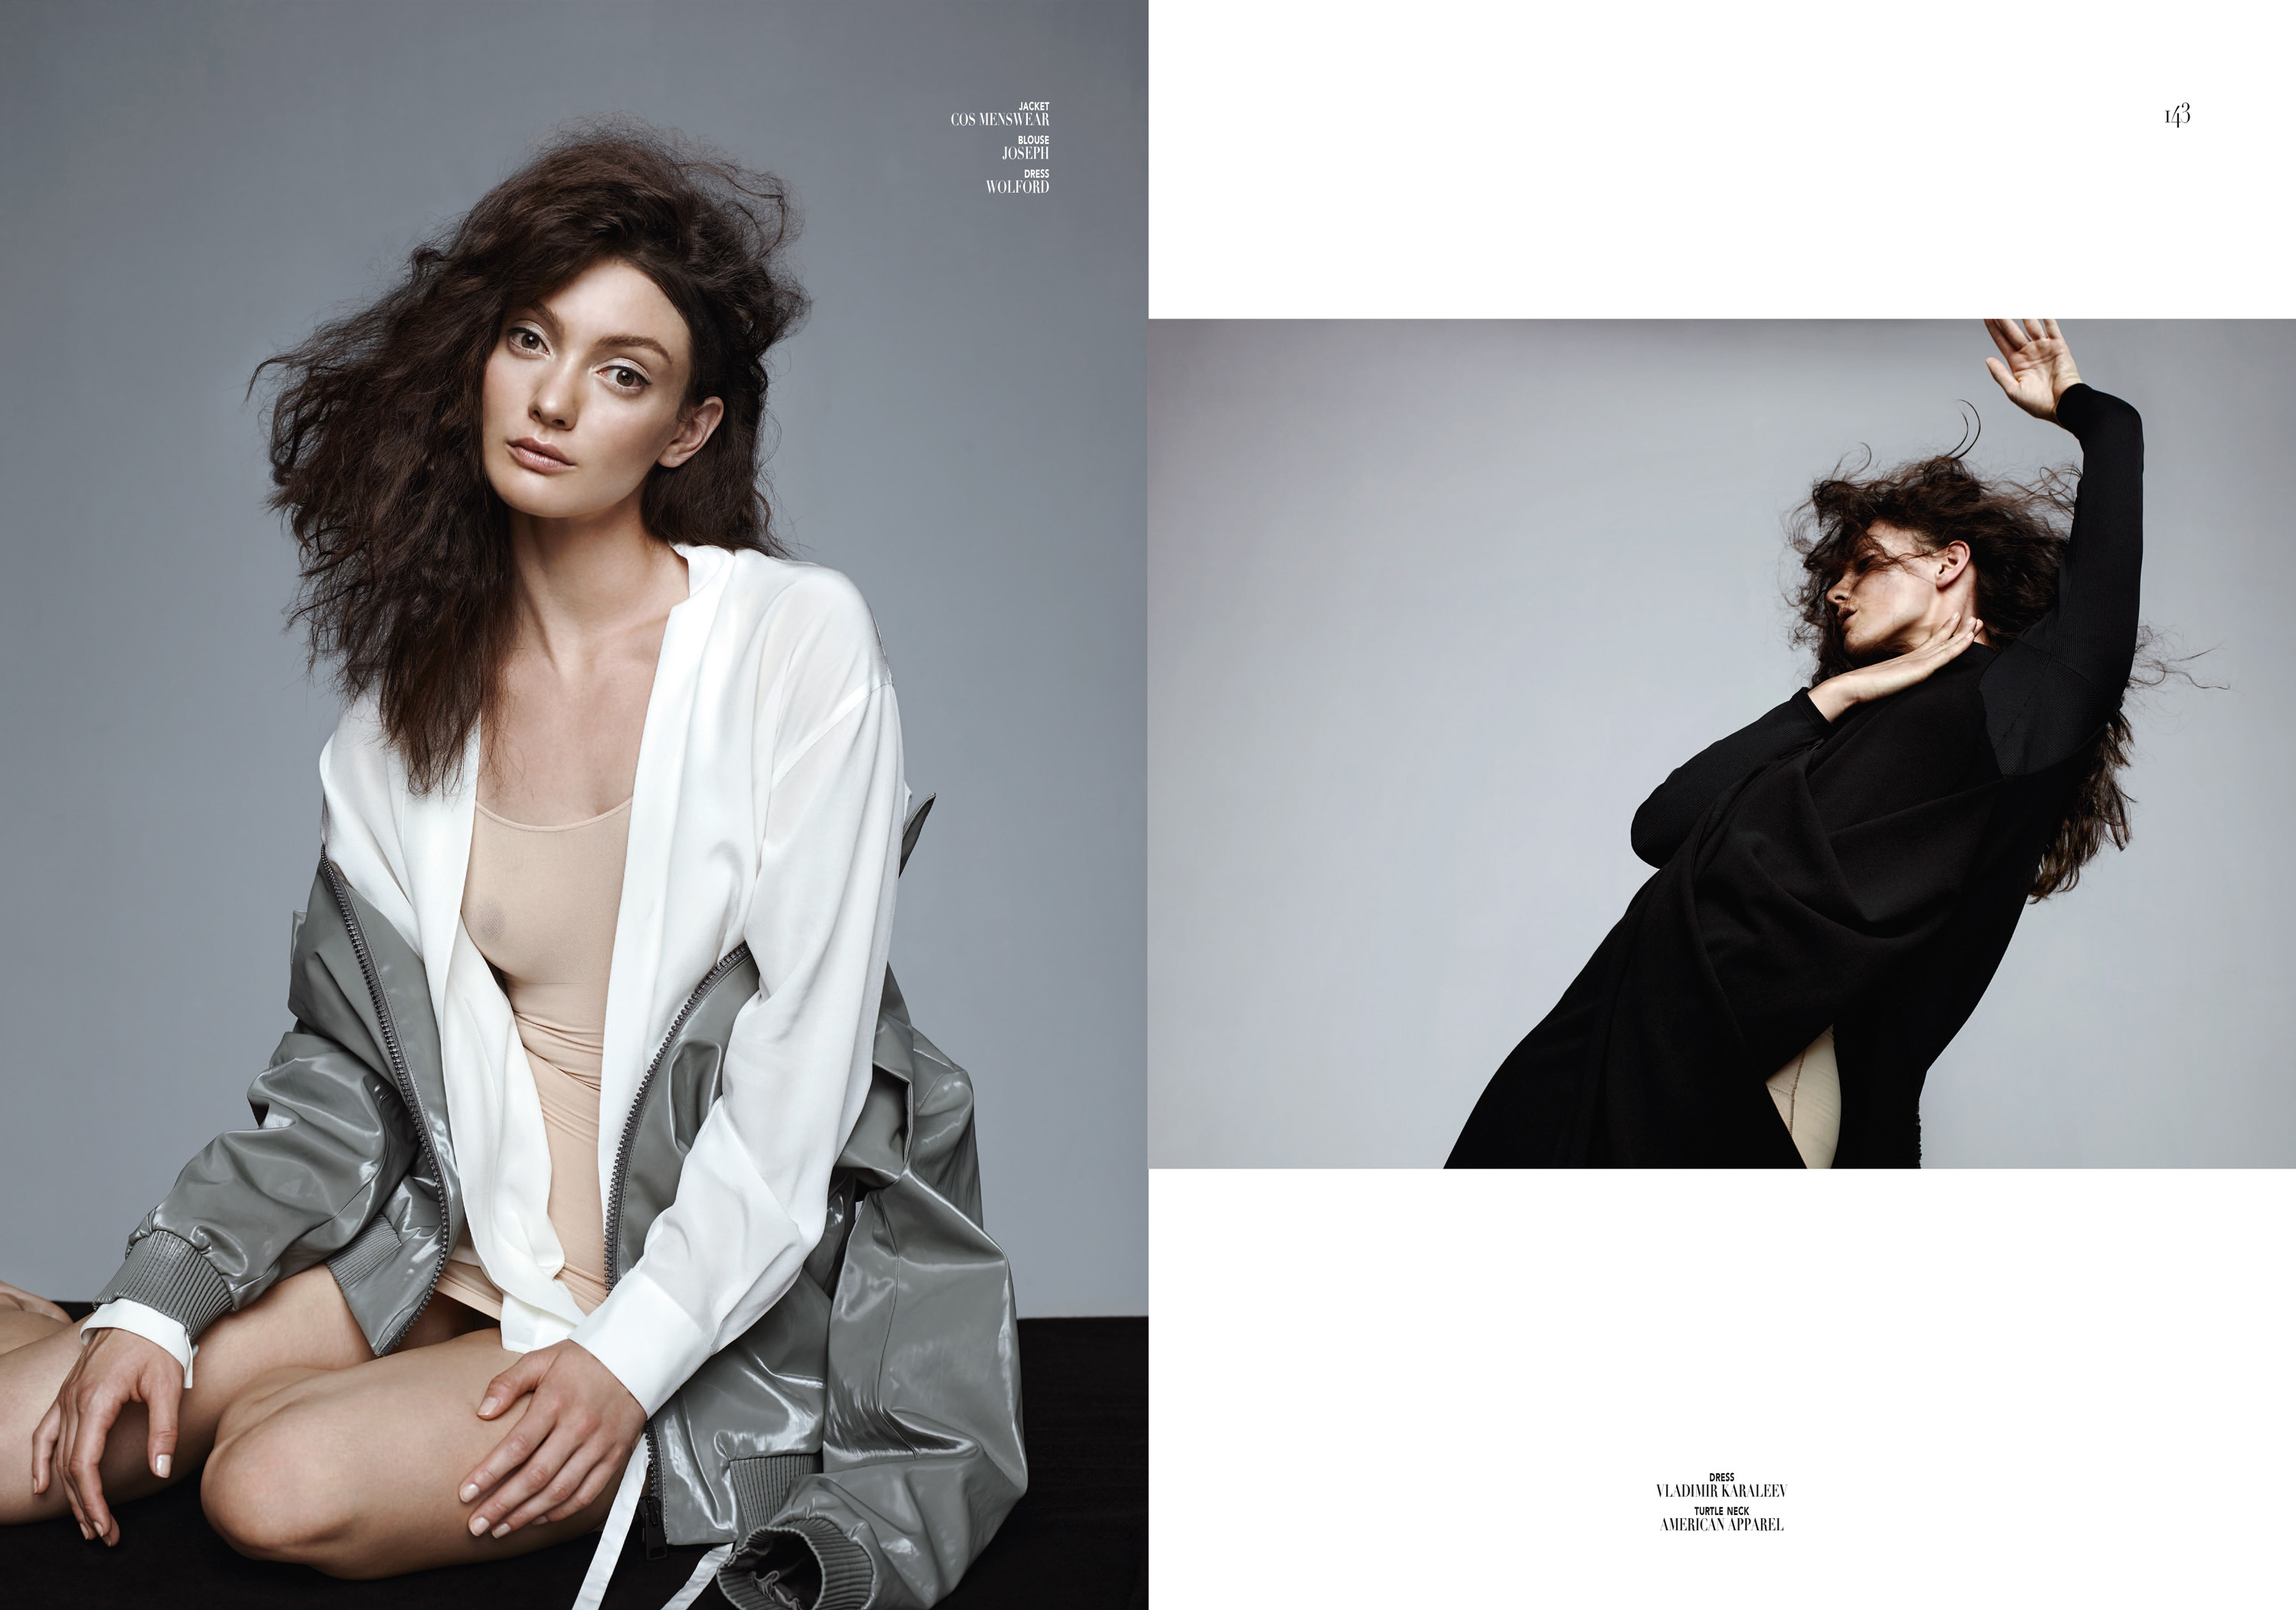 Detlef Schneider Photography, Le Mile Magazine, Nathalie Opku Styling, Model Avianna McKee